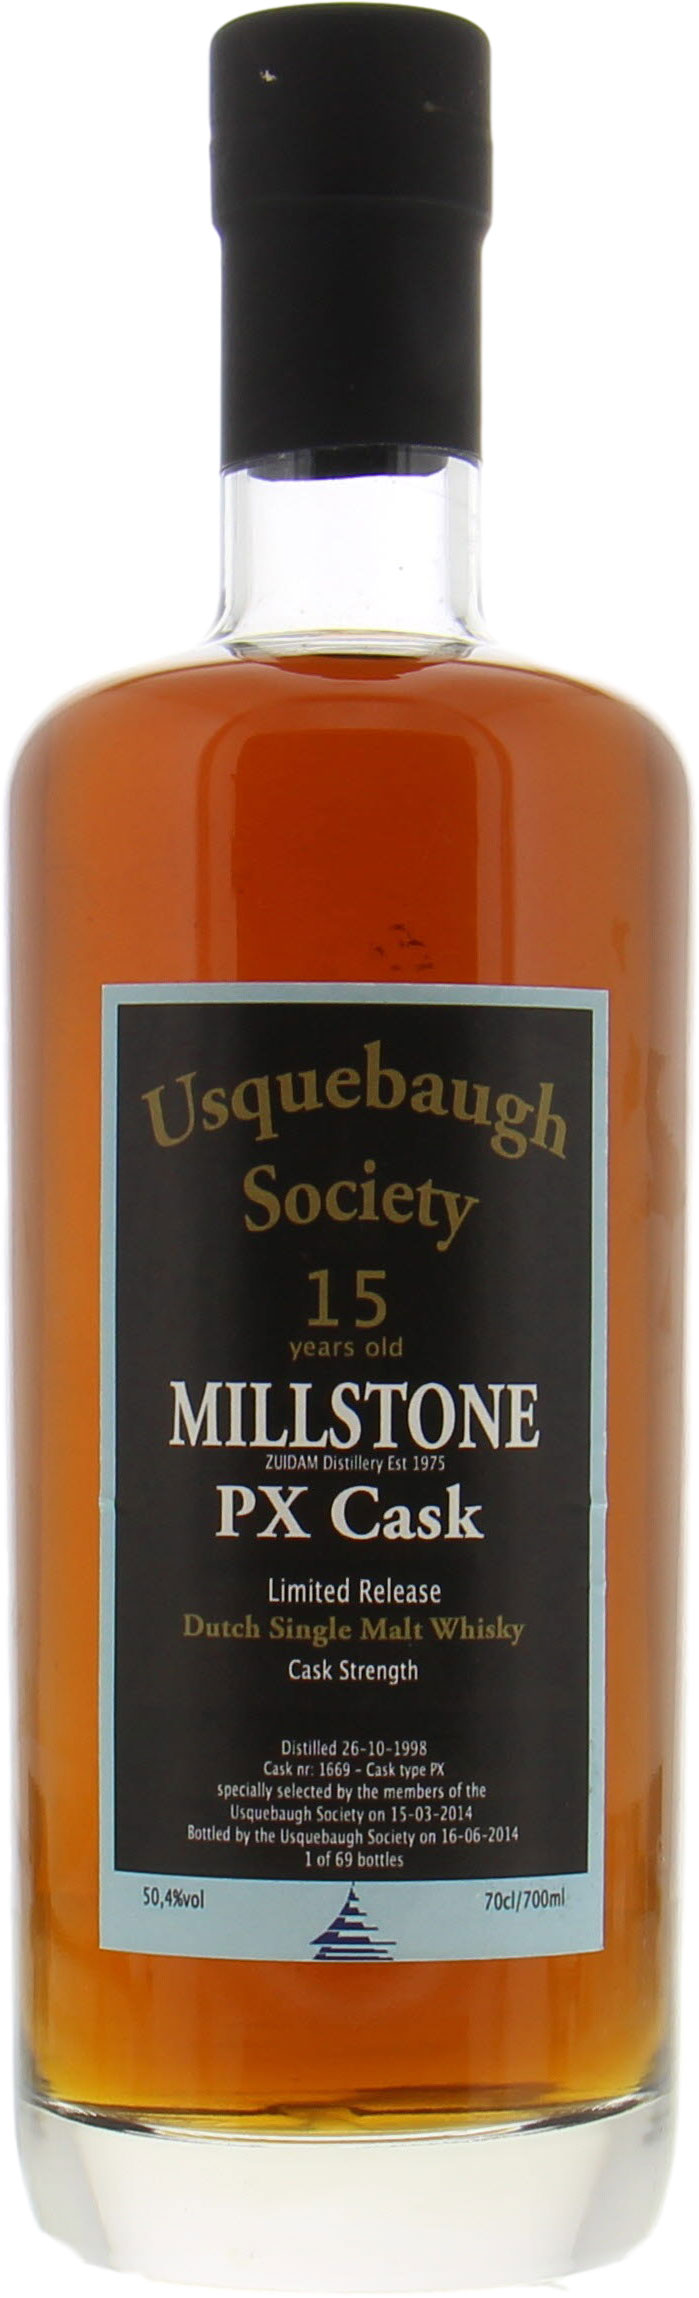 Millstone - 15 Years Old PX Cask 1669 Usquebaugh Society 50.4% 1998